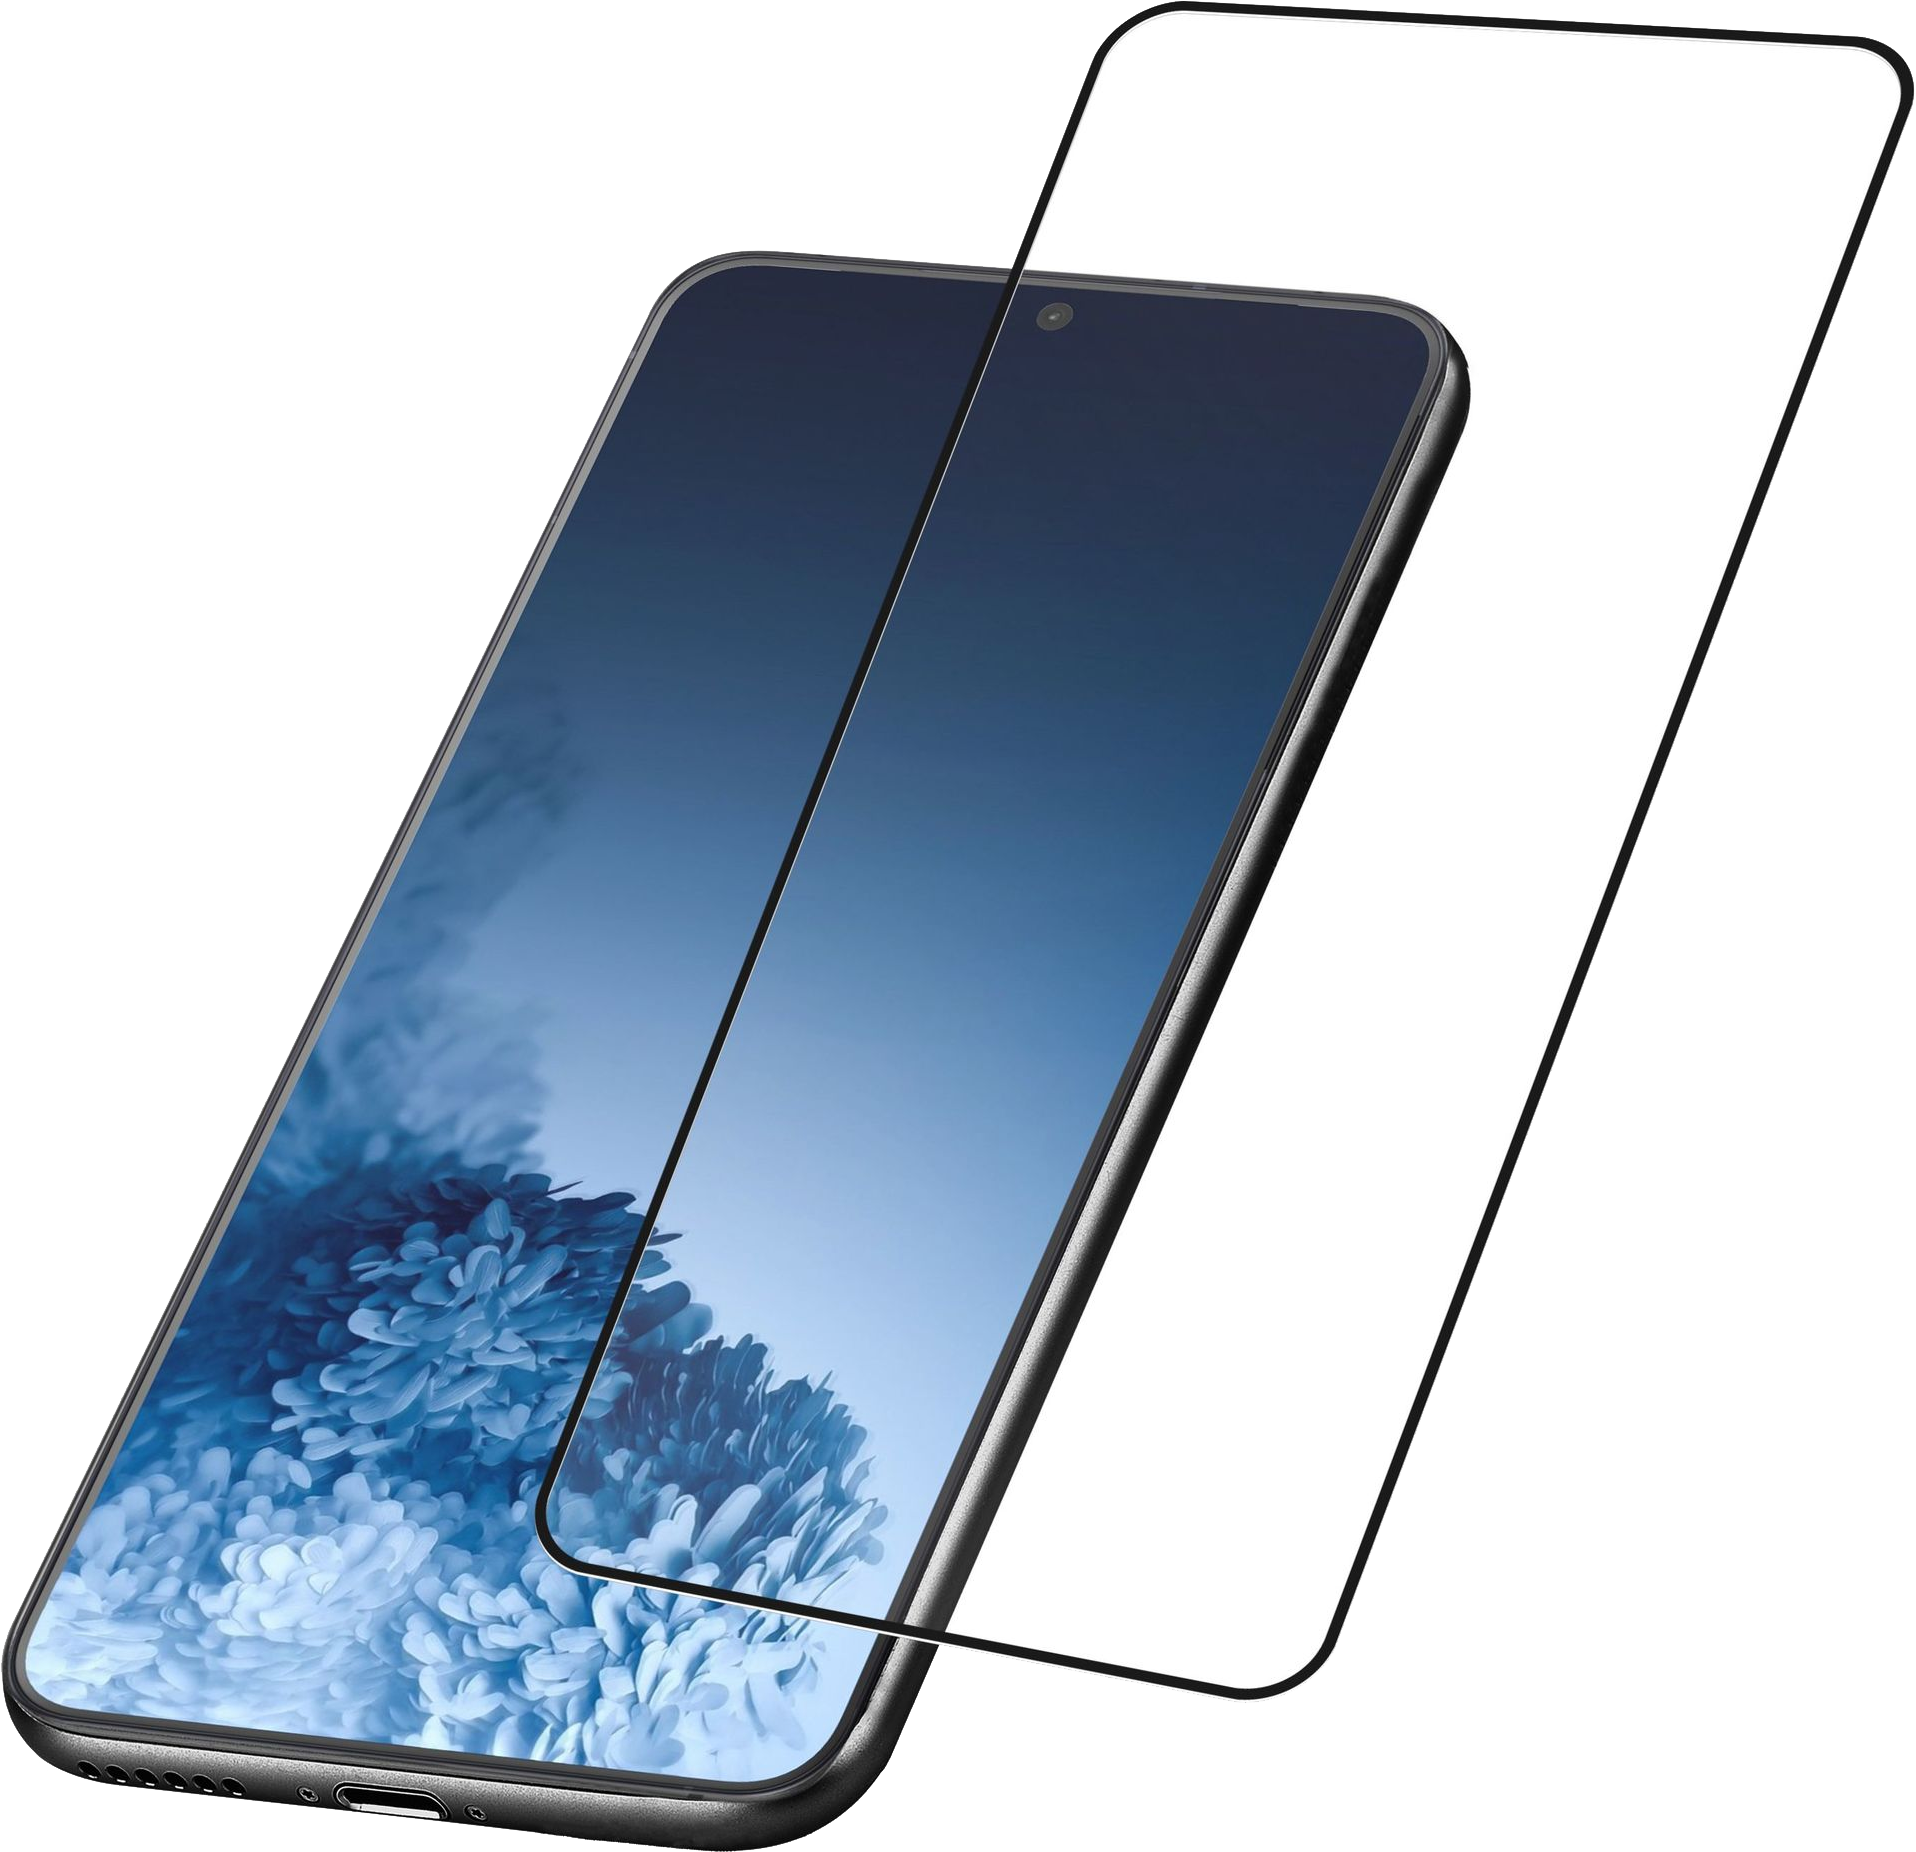 Samsung galaxy s21 стекло. Защитное стекло Samsung Galaxy а21s. Защитное стекло на самсунг s21 Ultra. Samsung Galaxy a21s стекло. Защитное стекло s21 Ultra.